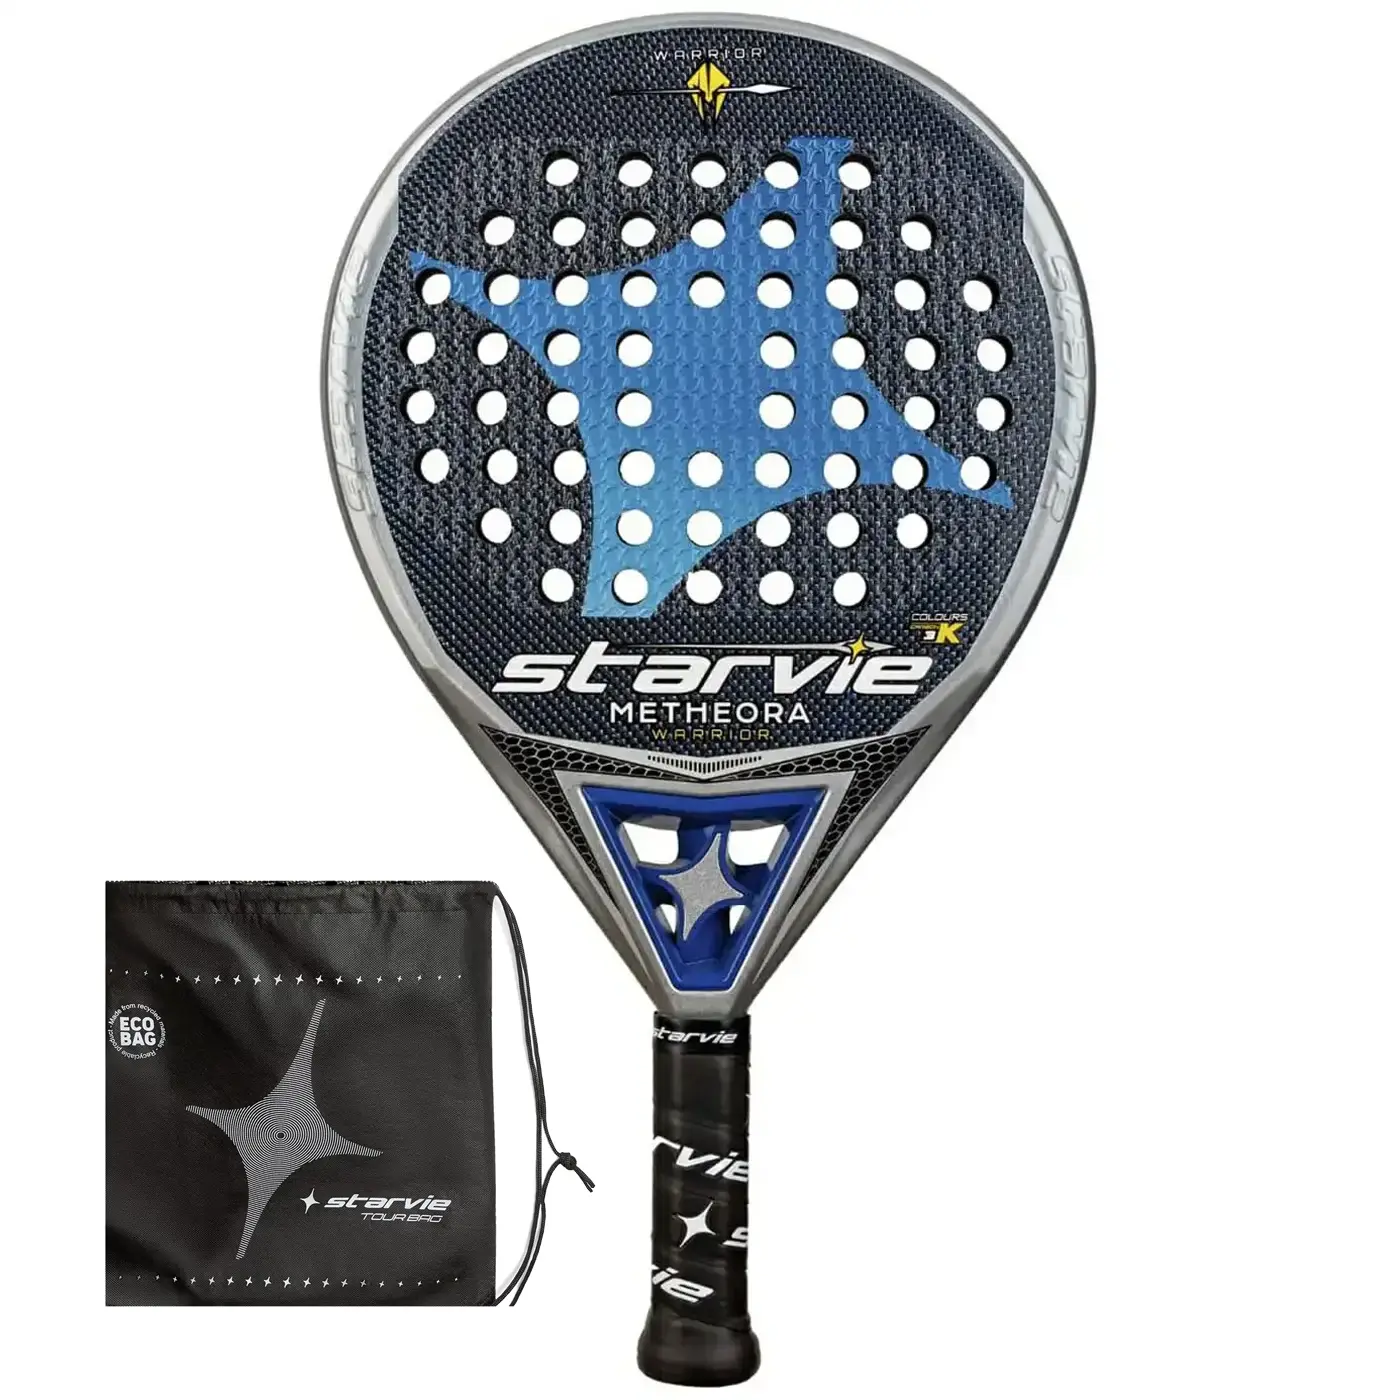 Starvie Metheora Warrior 22 Padel Racket, Best Padel Rackets 2022 Image